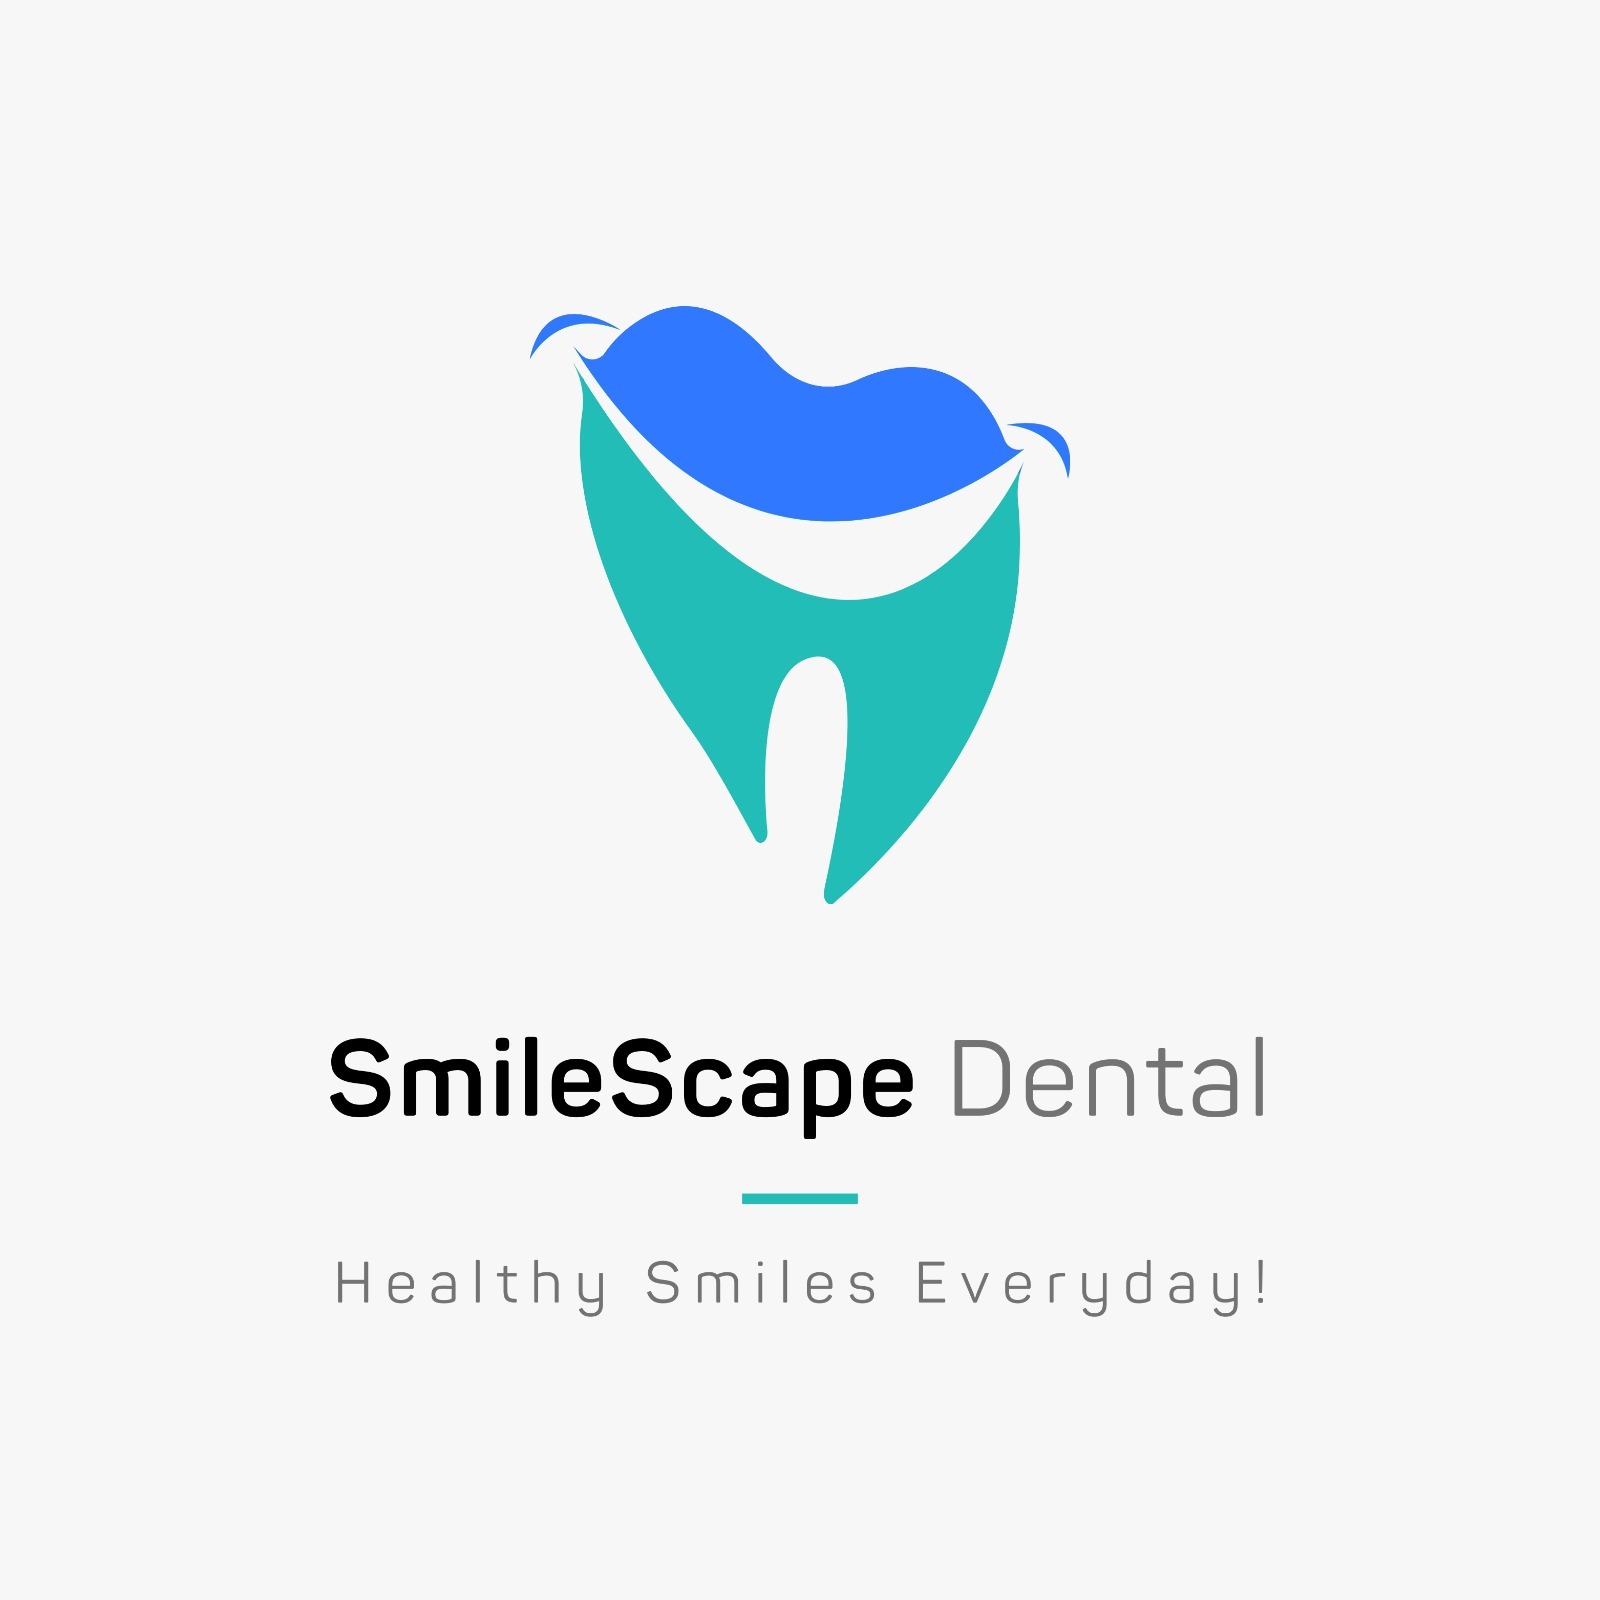 SmileScape Dental|Hospitals|Medical Services